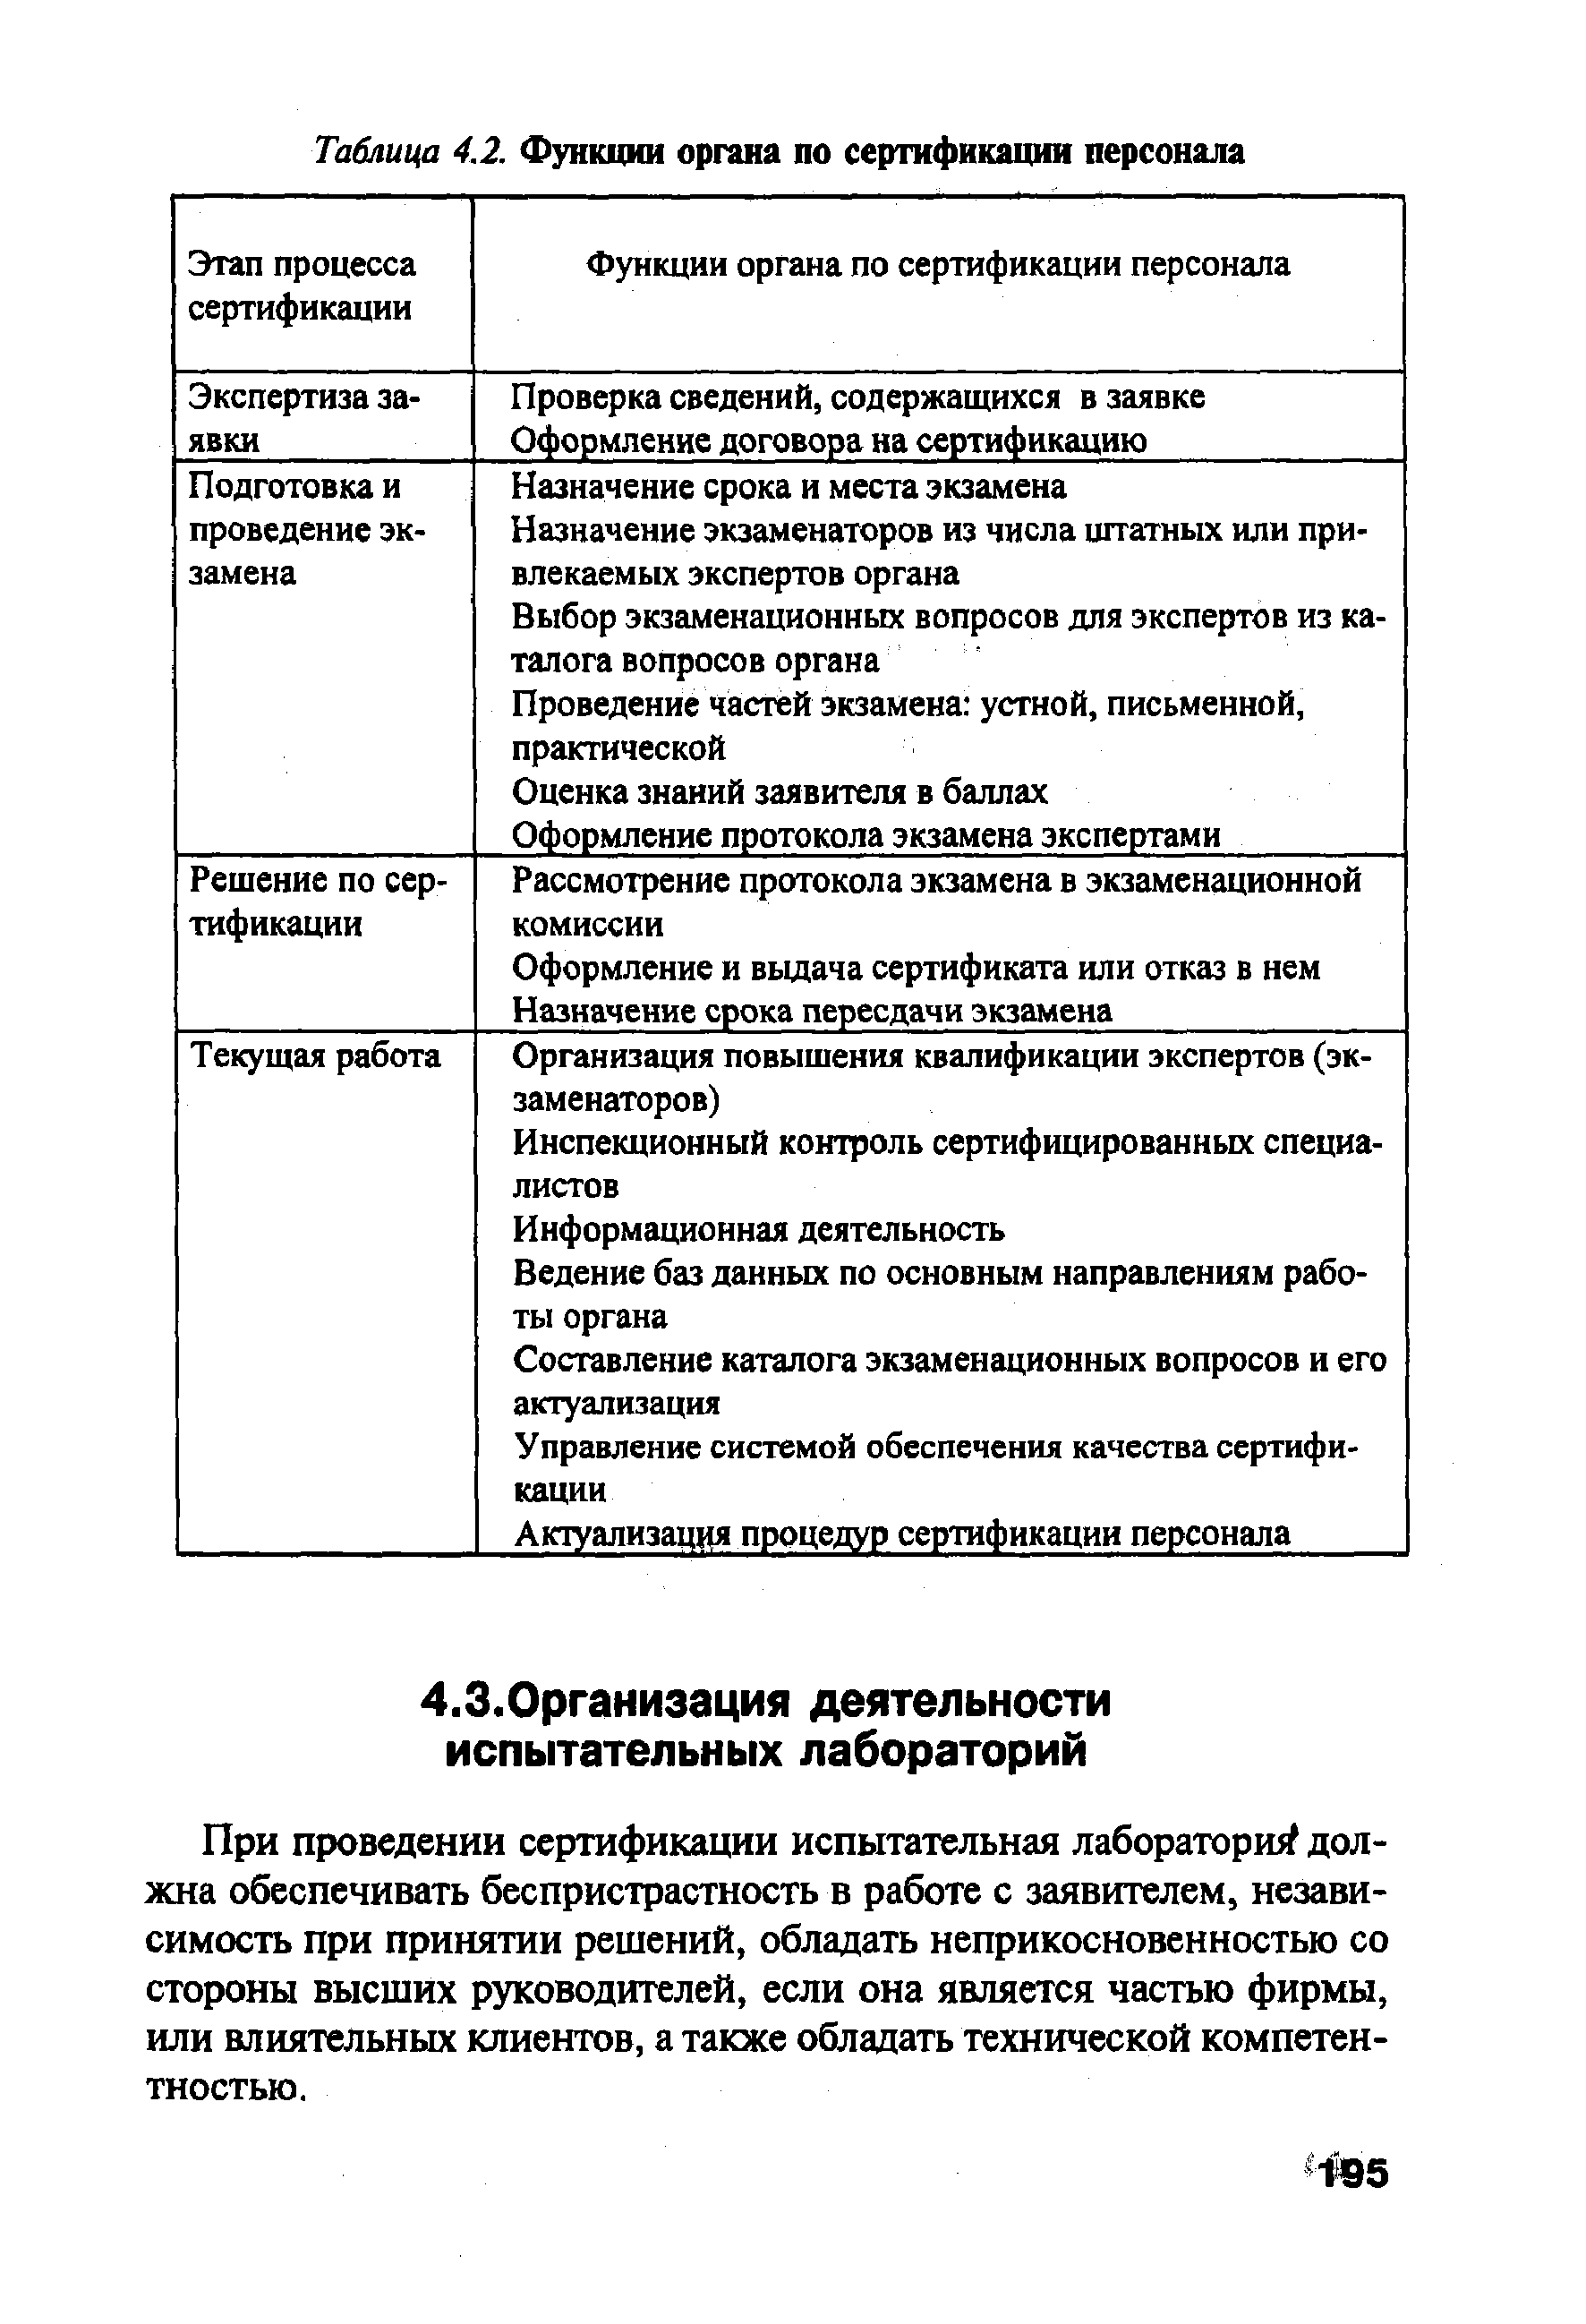 Таблица 4.2. Функции органа по сертификации персонала
